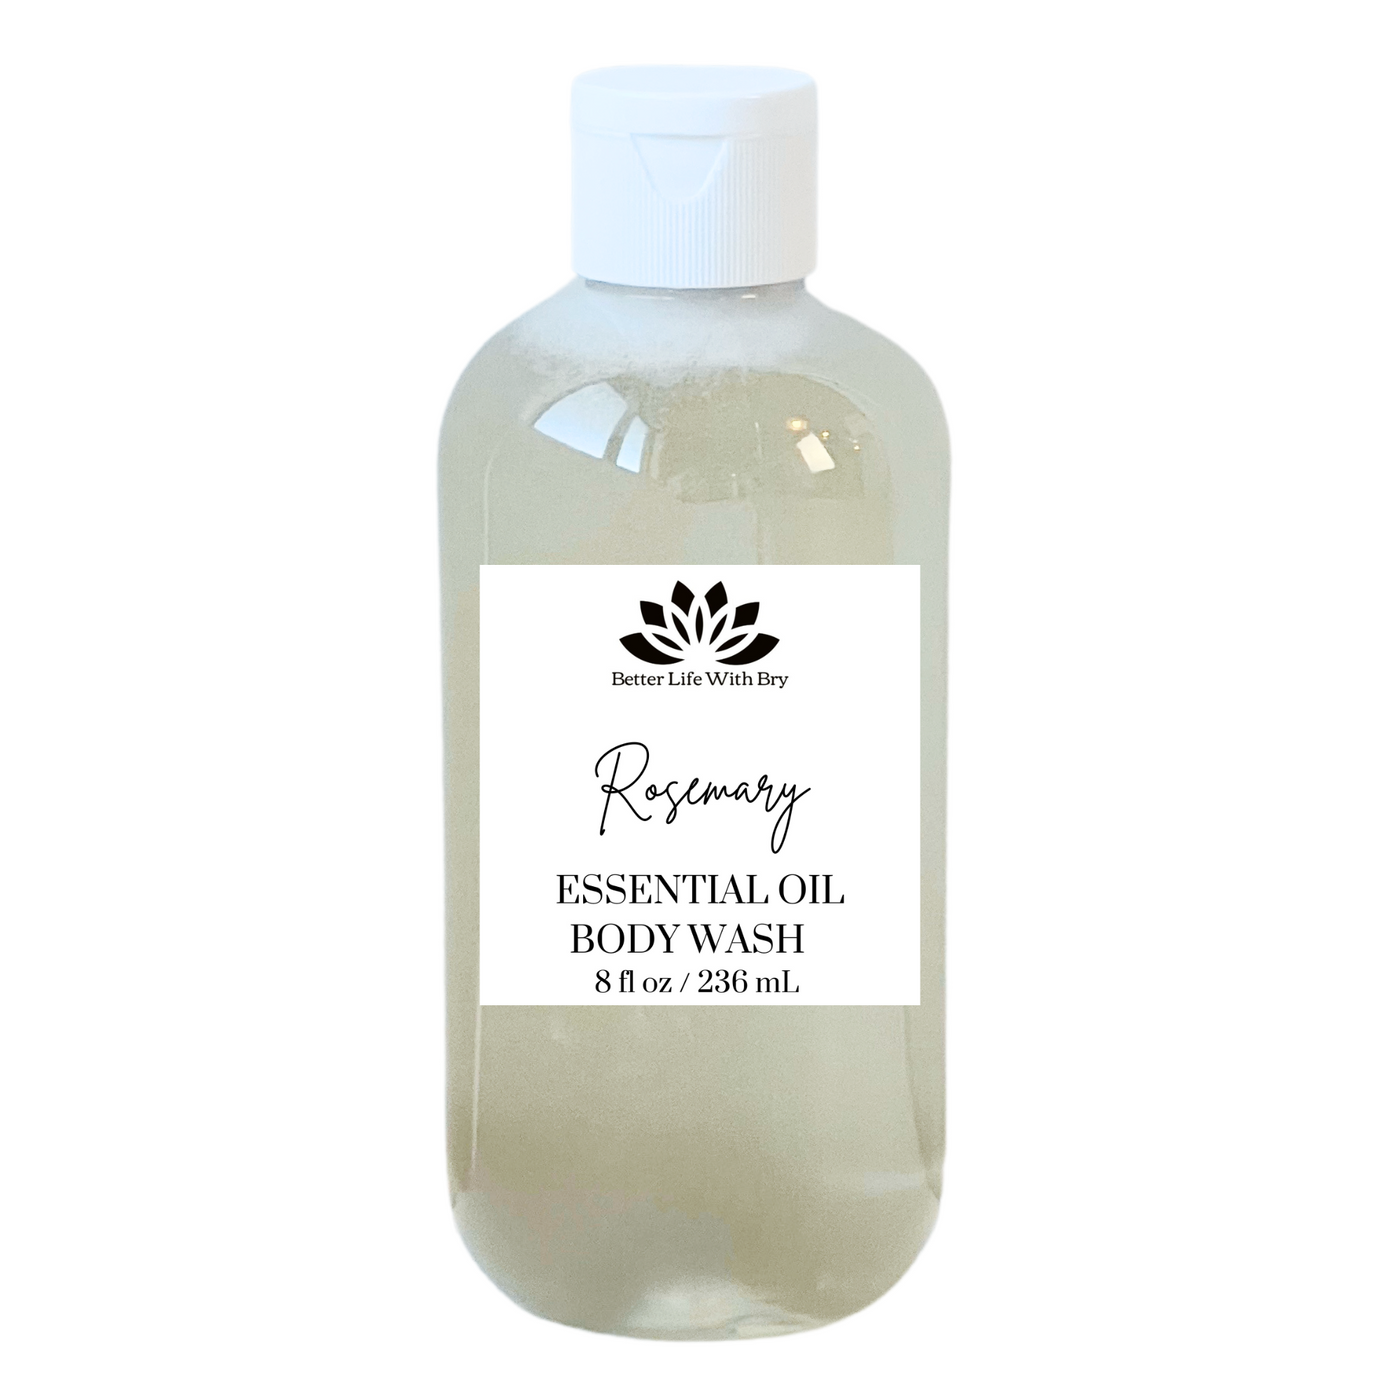 Rosemary Essential Oil Body Wash